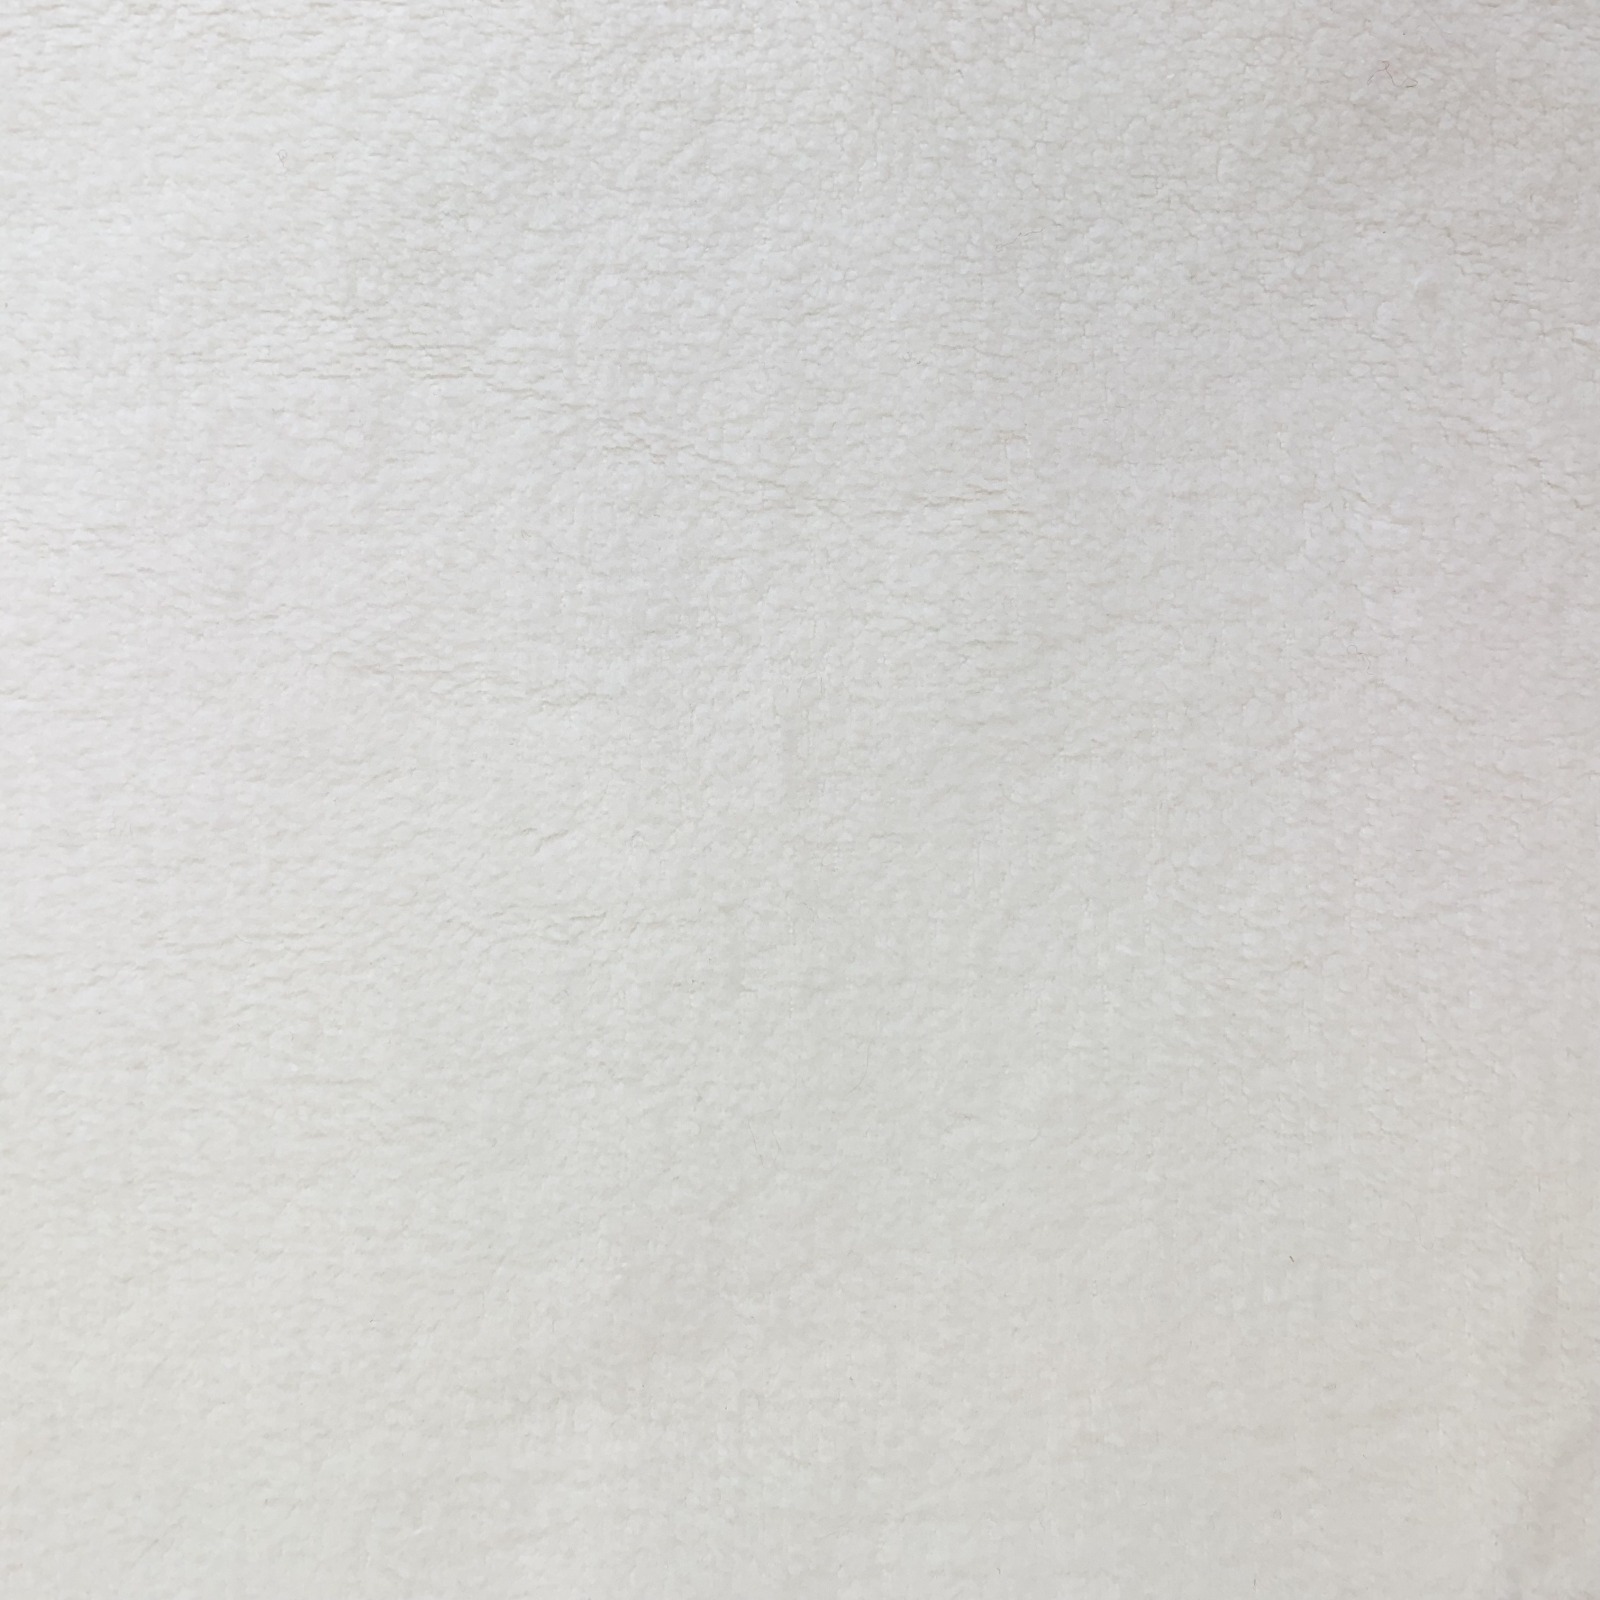 Baumwollfleece - Weiß - 60 x 140 cm